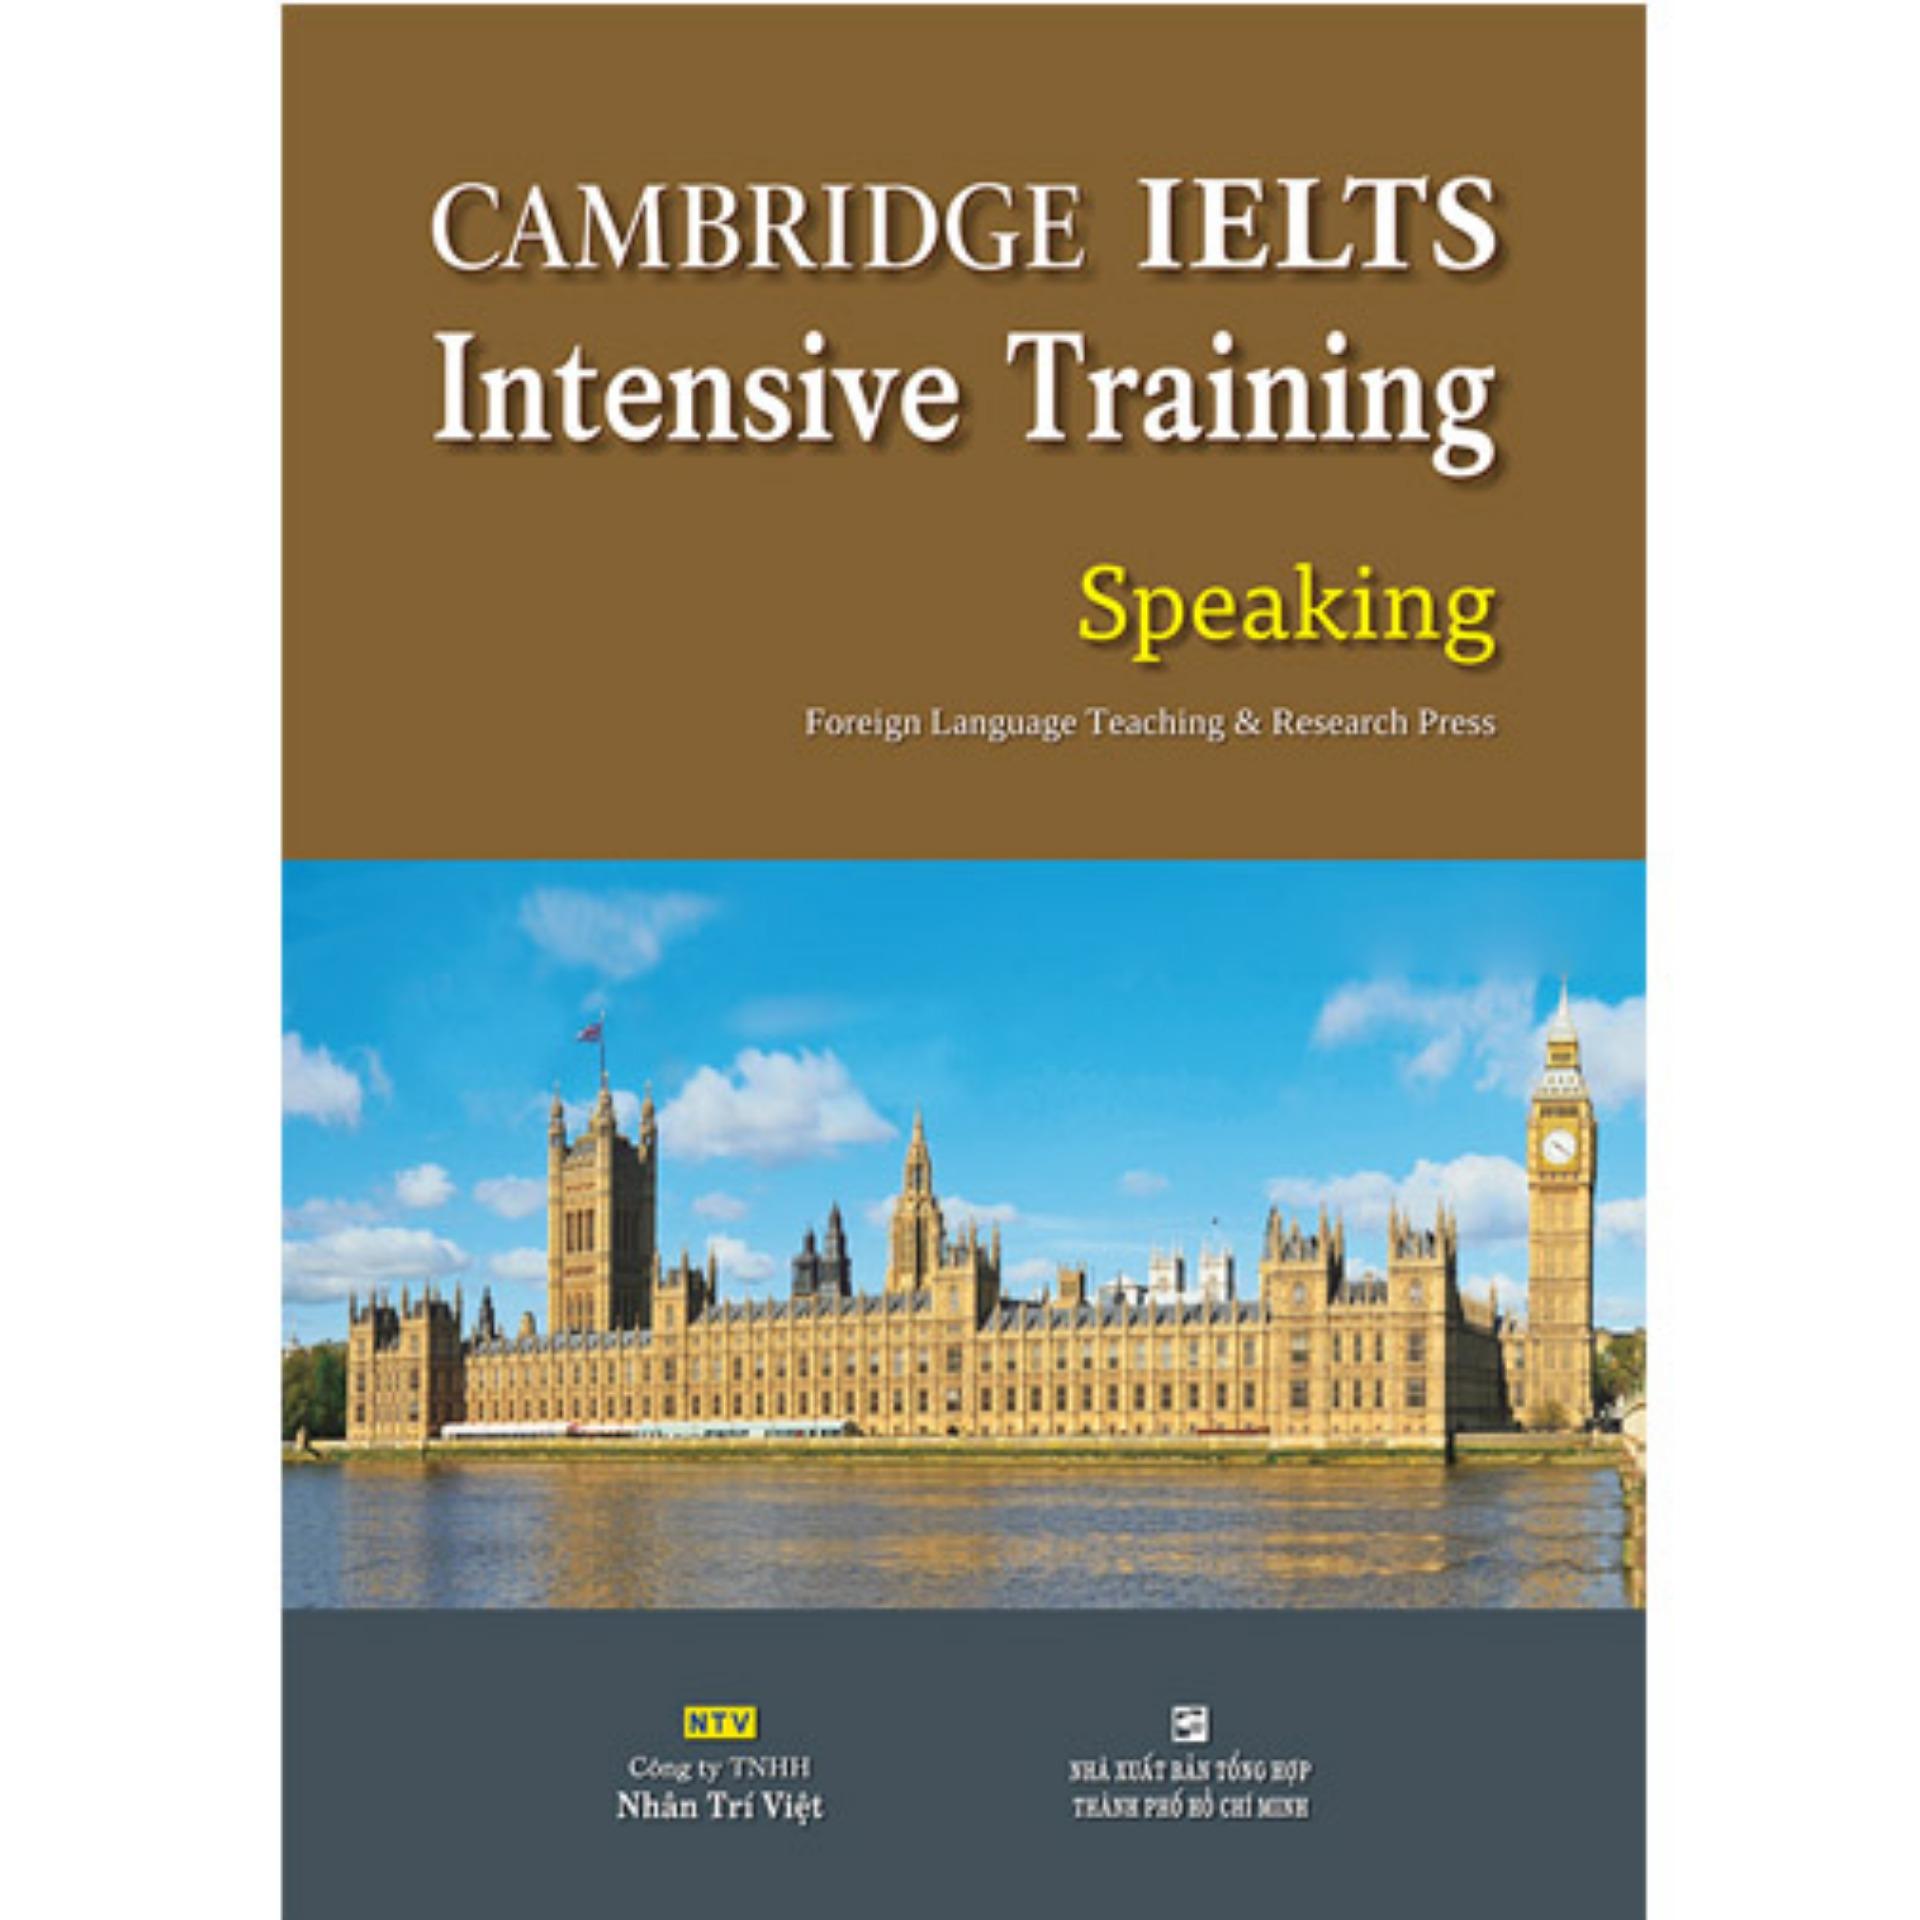 Cambridge IELTS Intensive Training Speaking - 218k